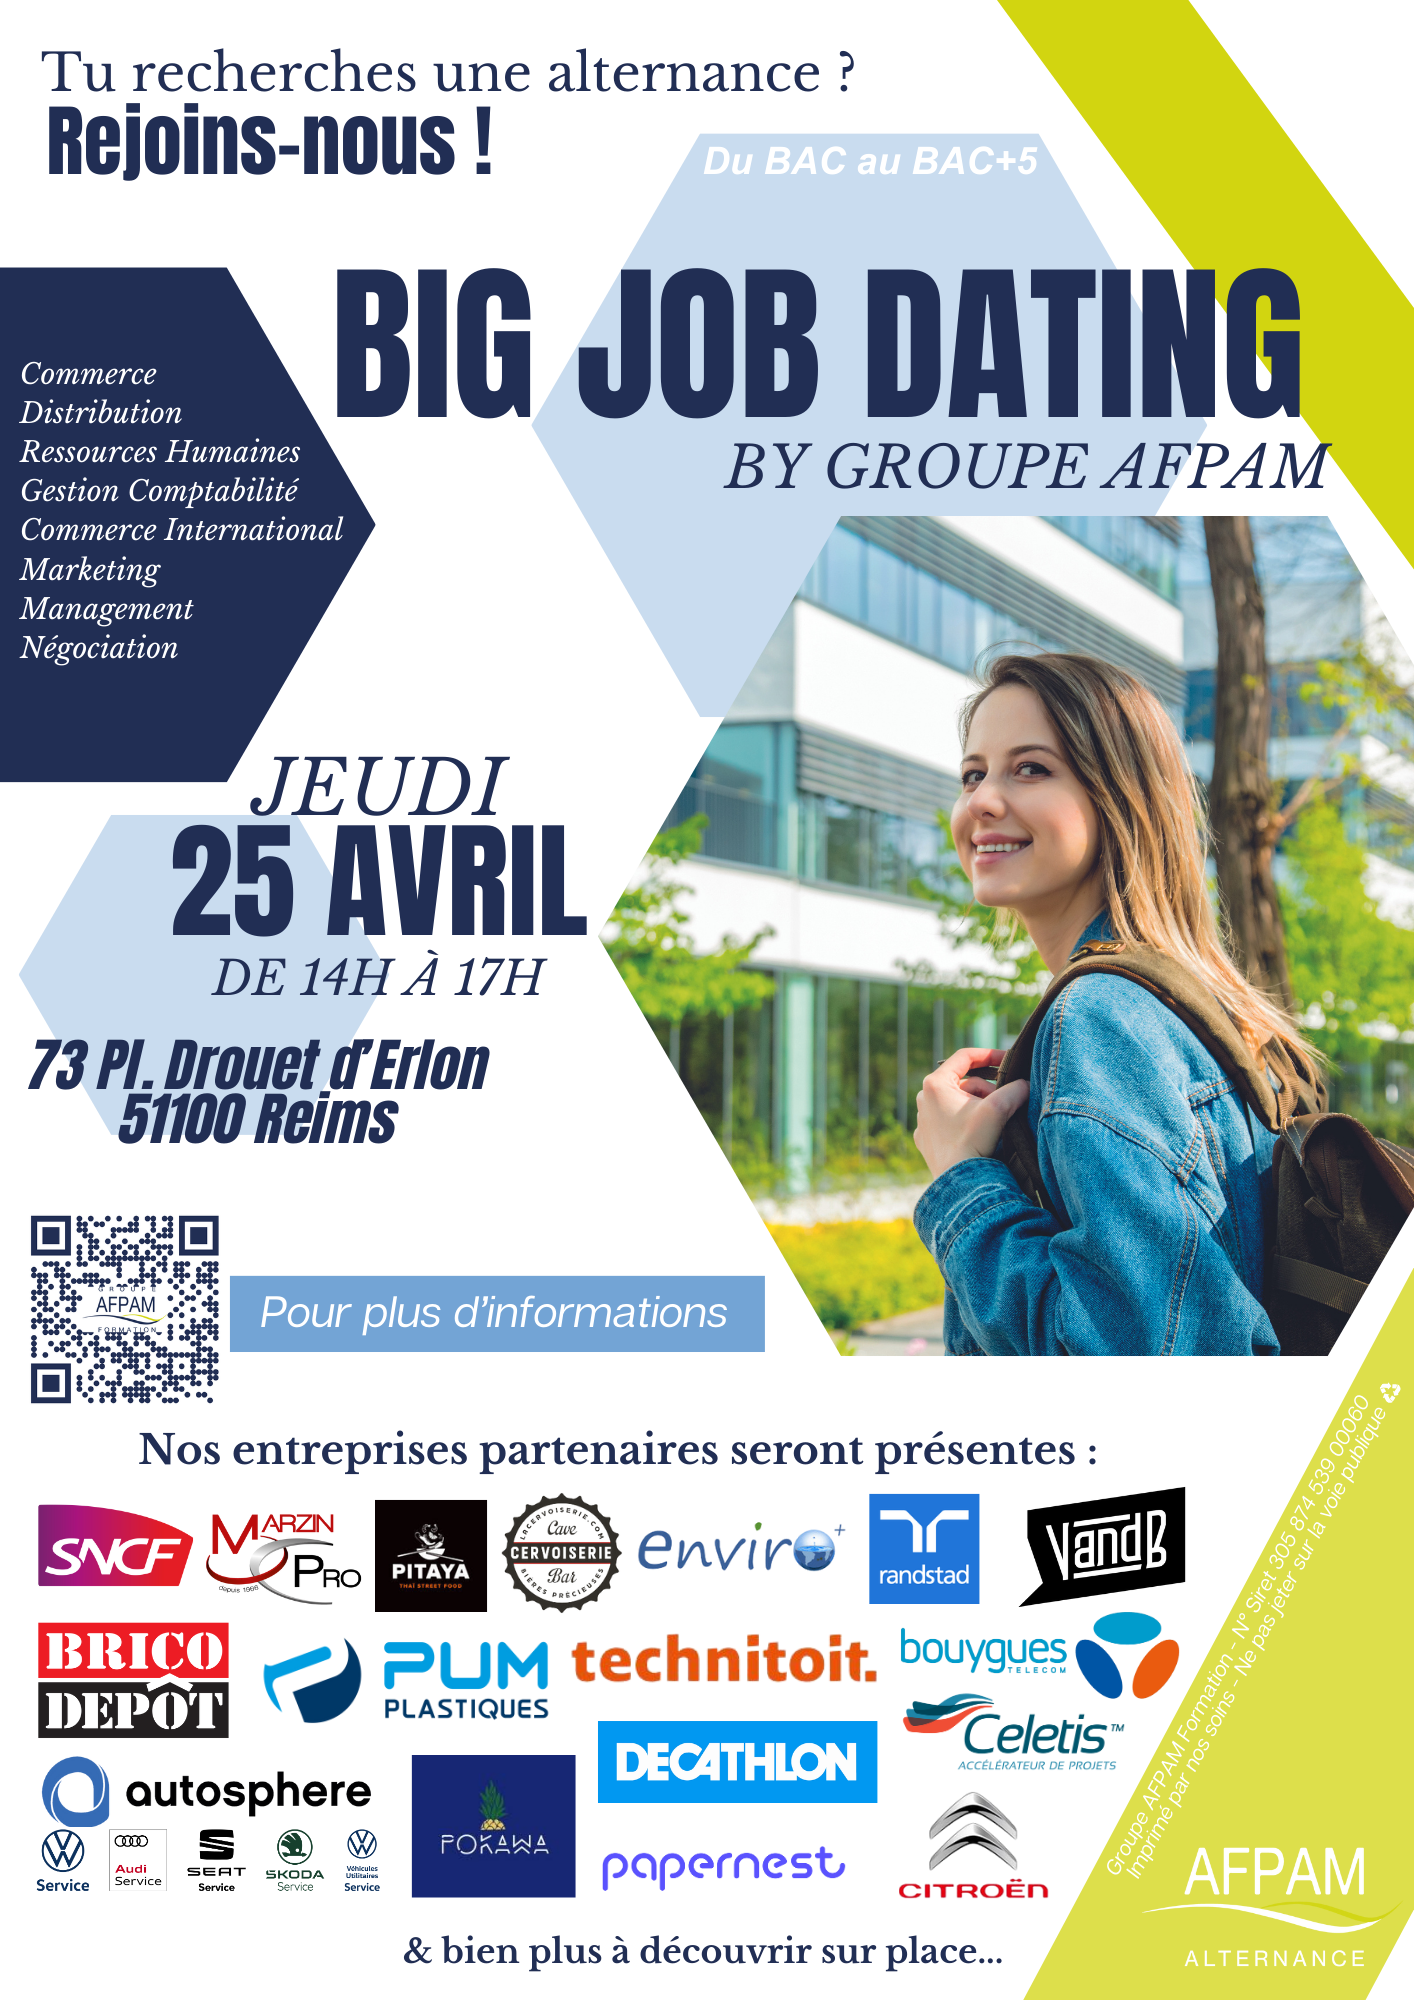 Job Dating Alternance Reims